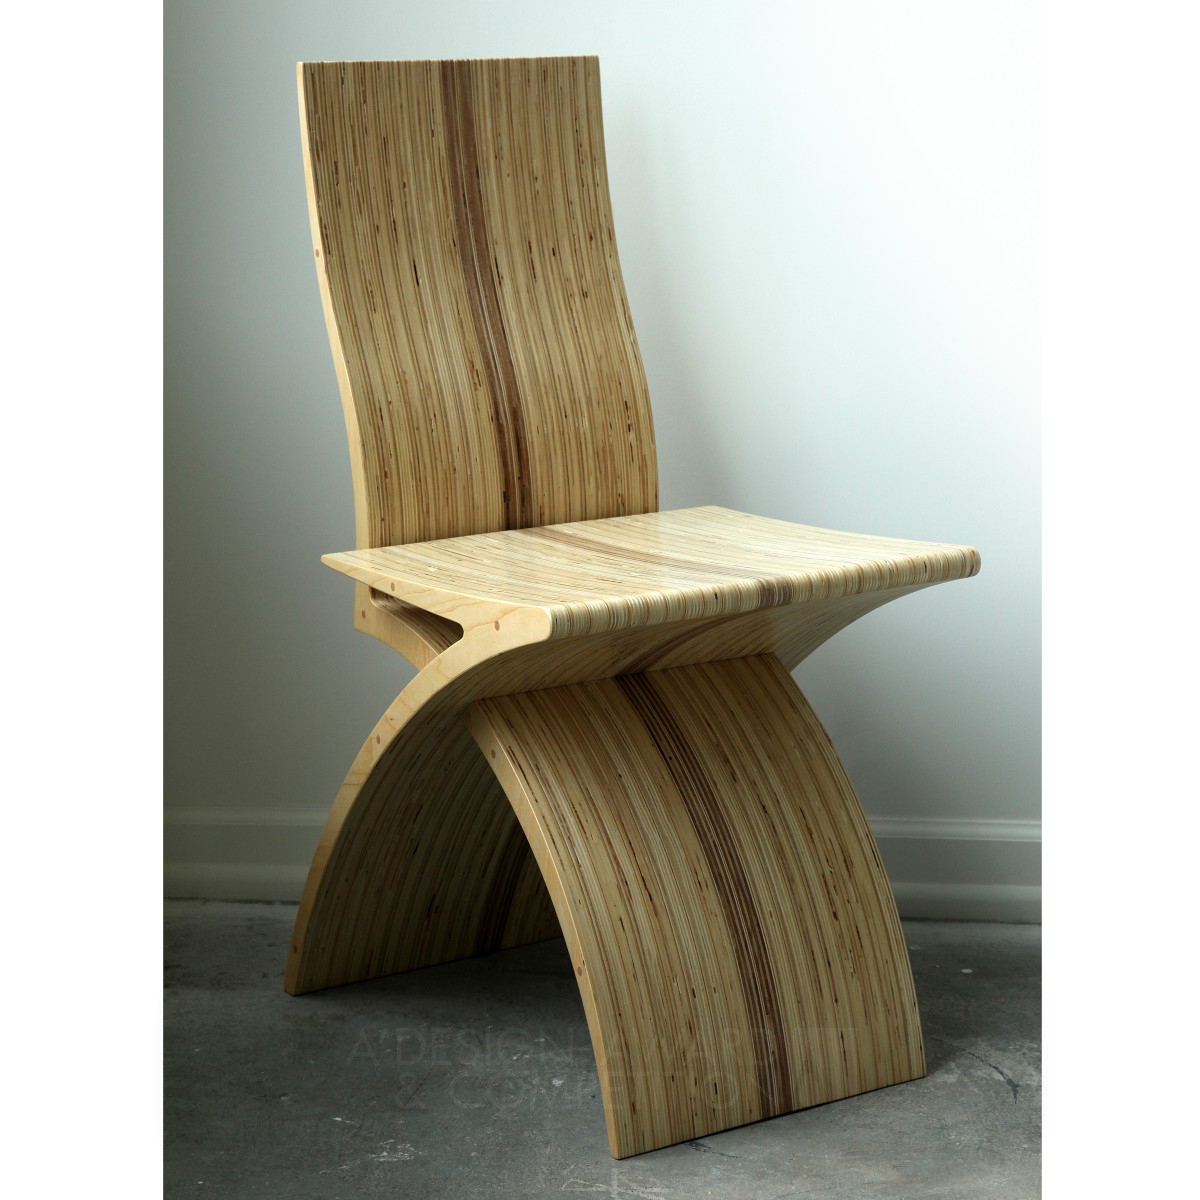 Xylo Chair by Morgan McBratney